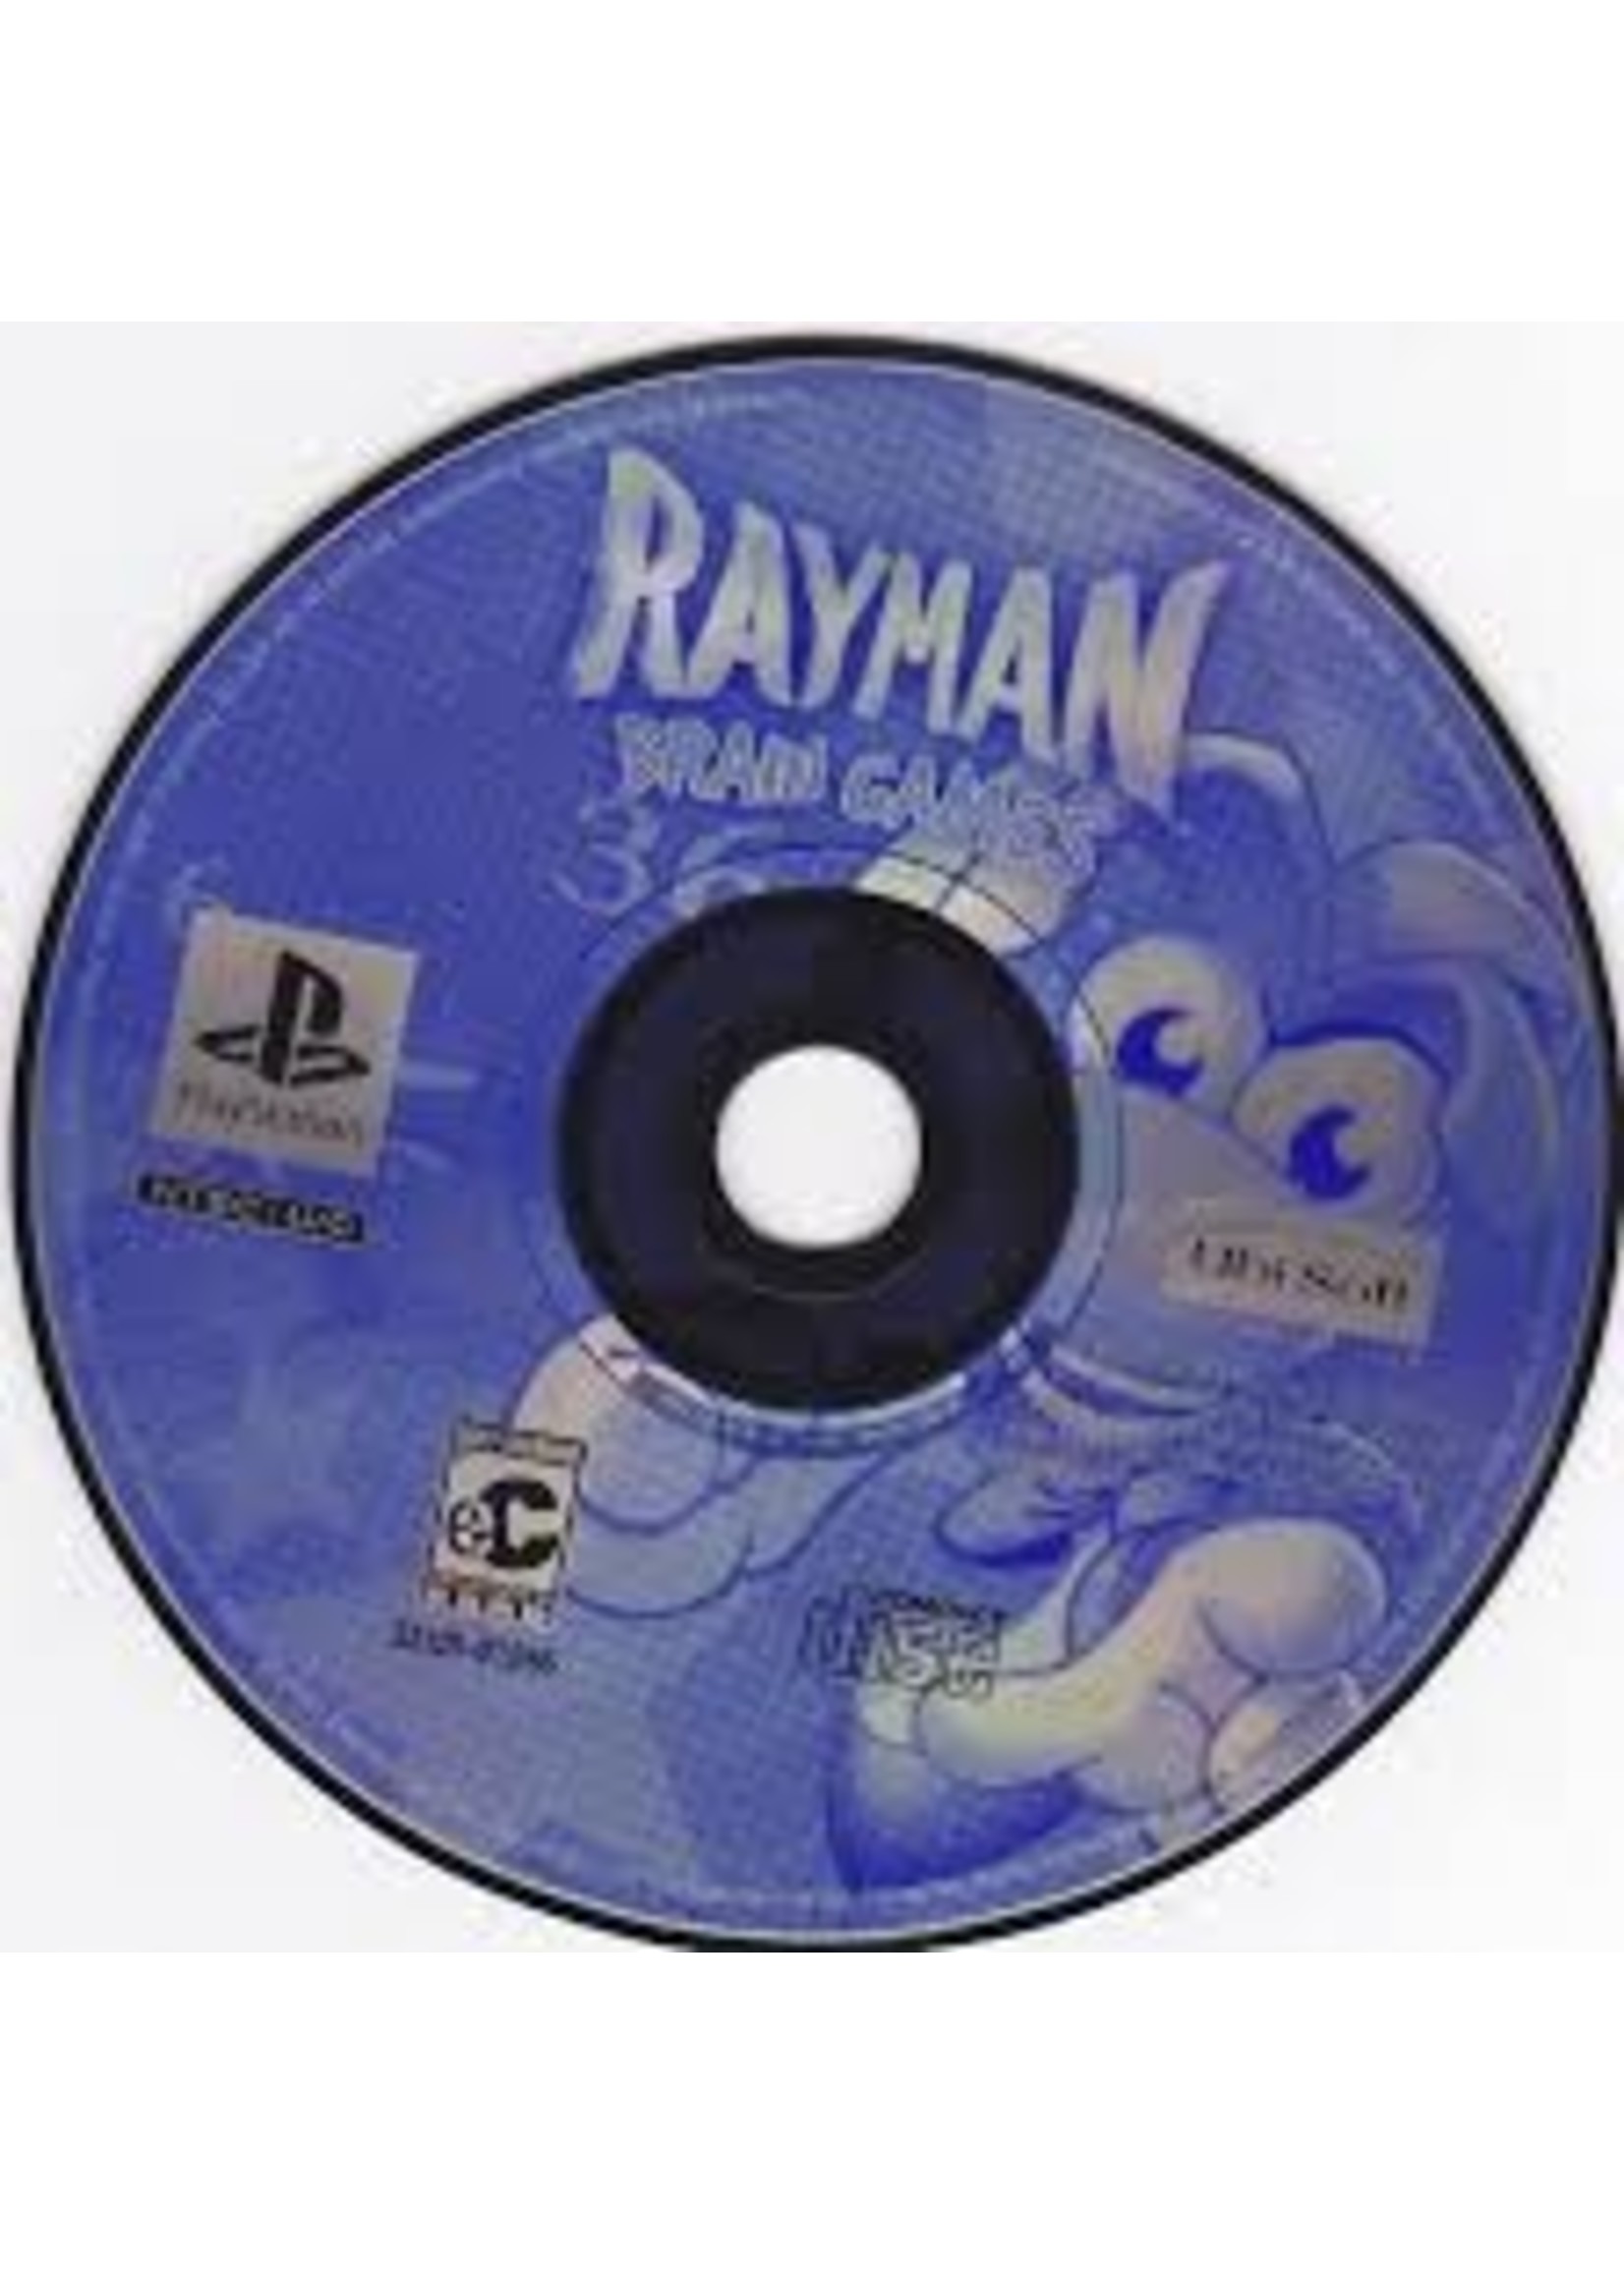 Sony Playstation 1 (PS1) Rayman Brain Games - Print